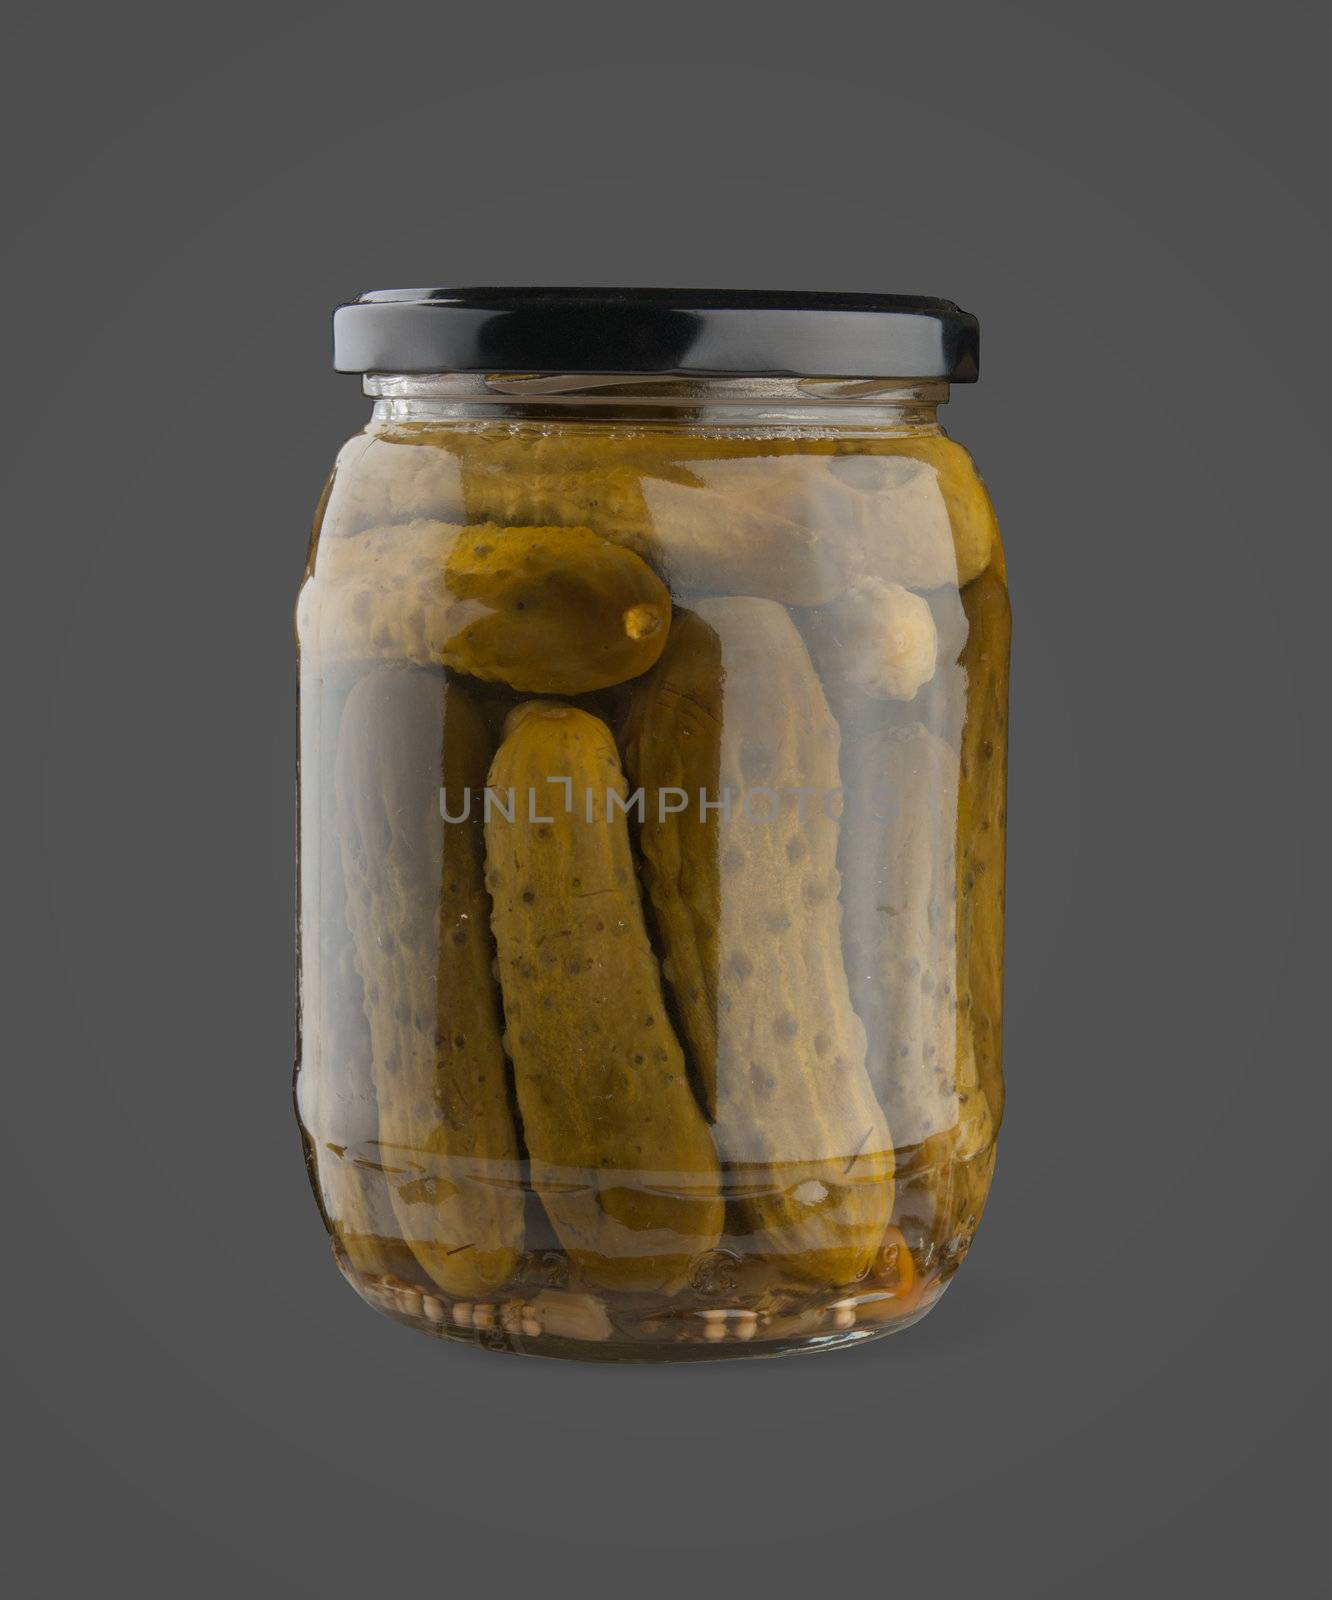 Marinated cucumbers in the glass jar on the dark grey